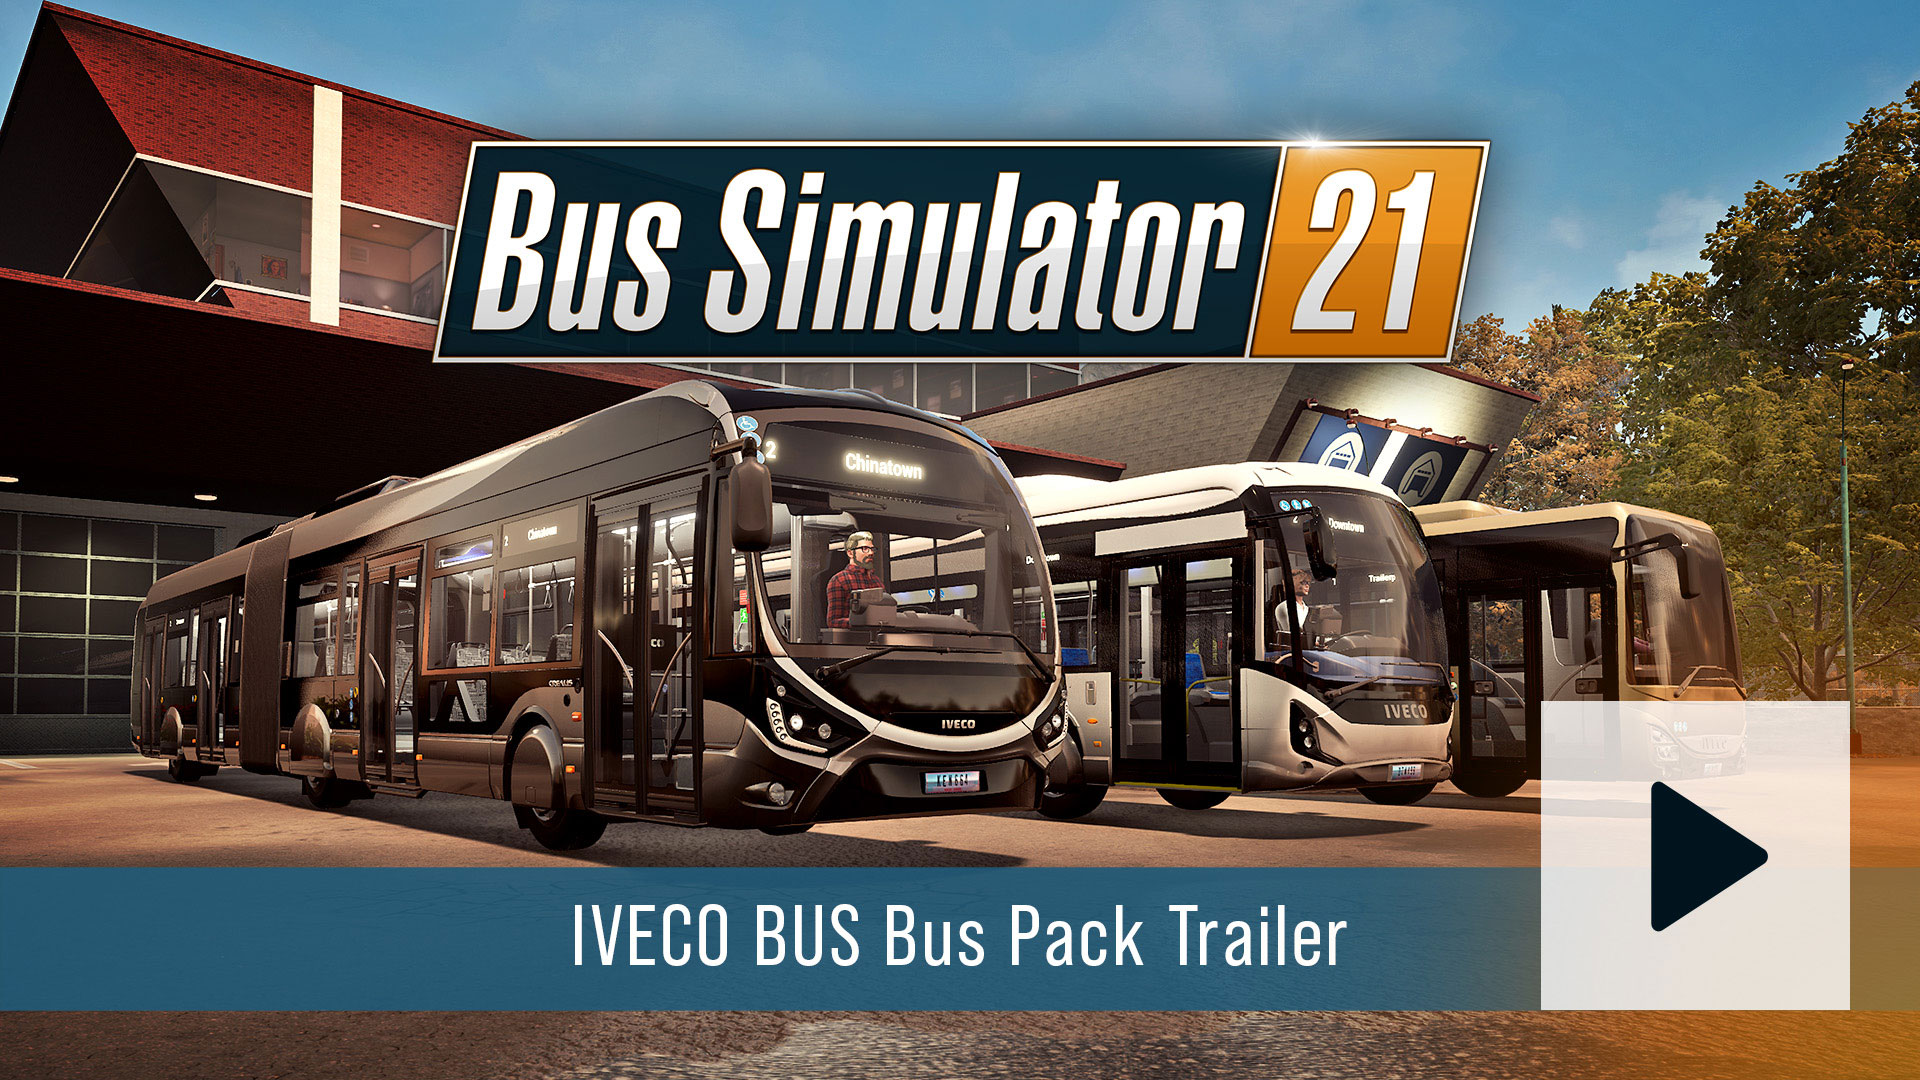 Tourist Bus Simulator Xbox One e Series X